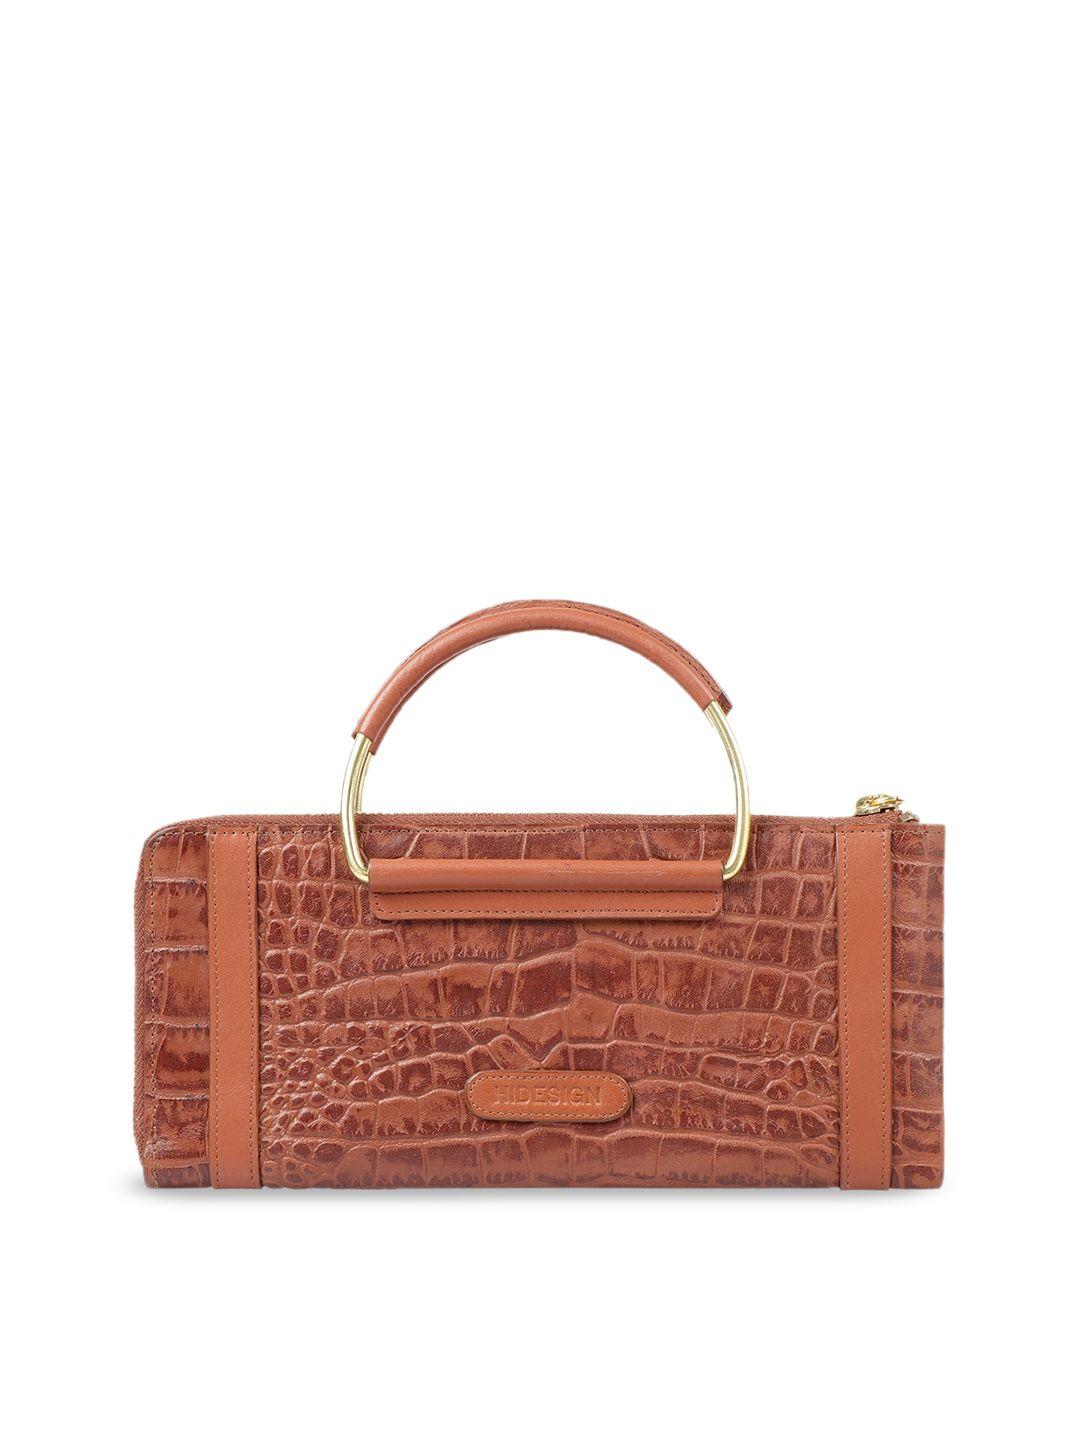 hidesign tan textured purse clutch